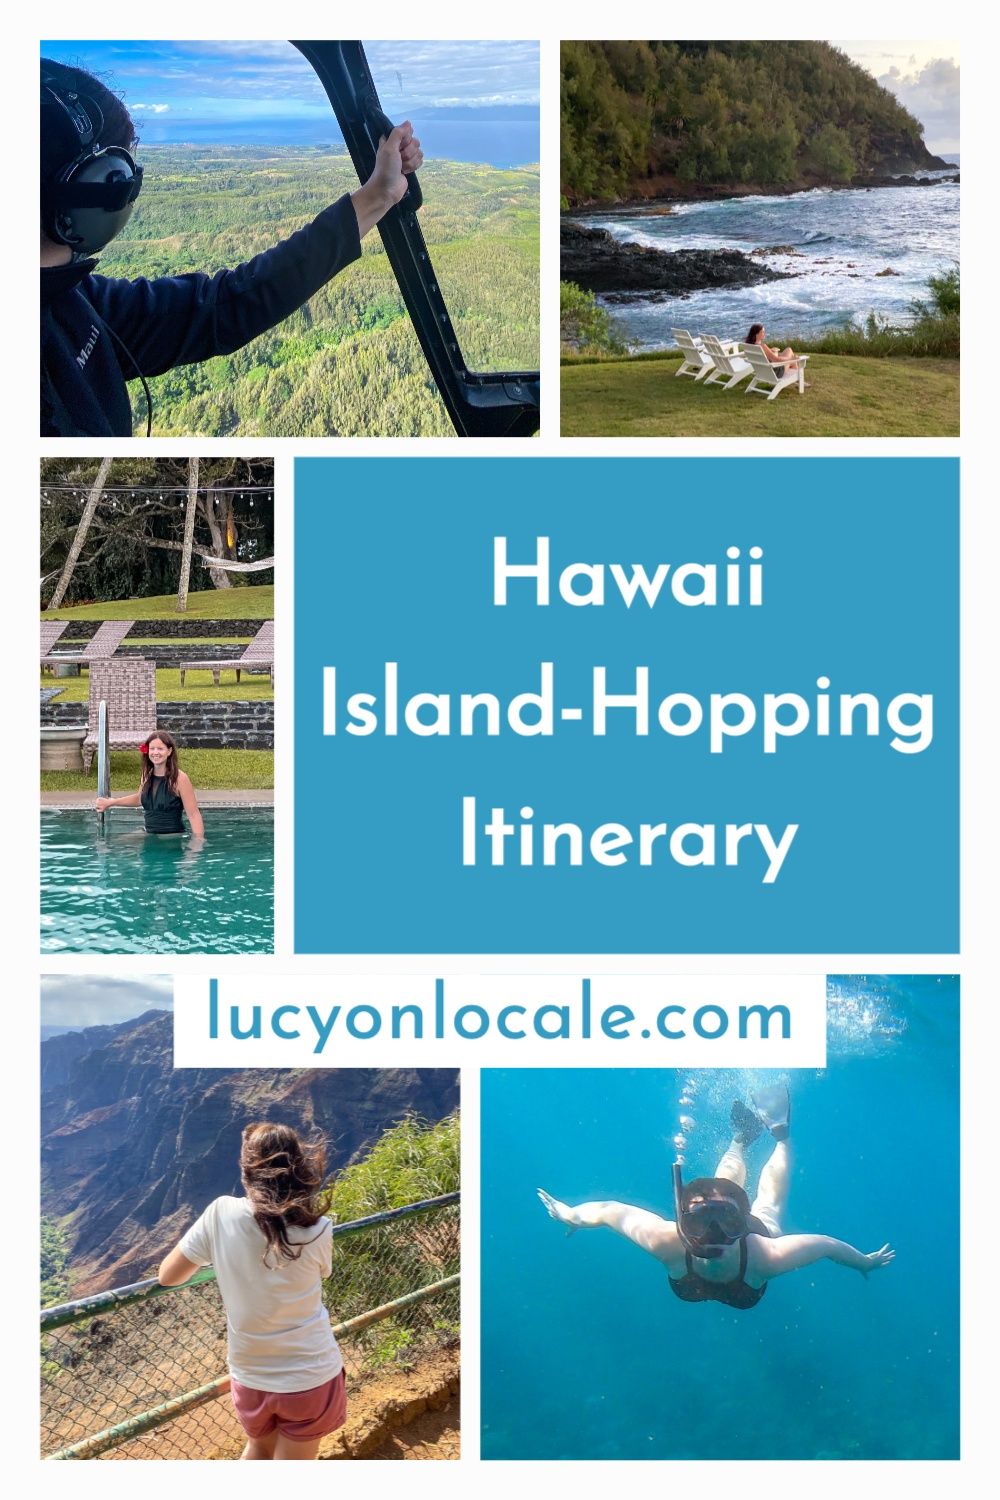 Hawaii Island-Hopping Itinerary